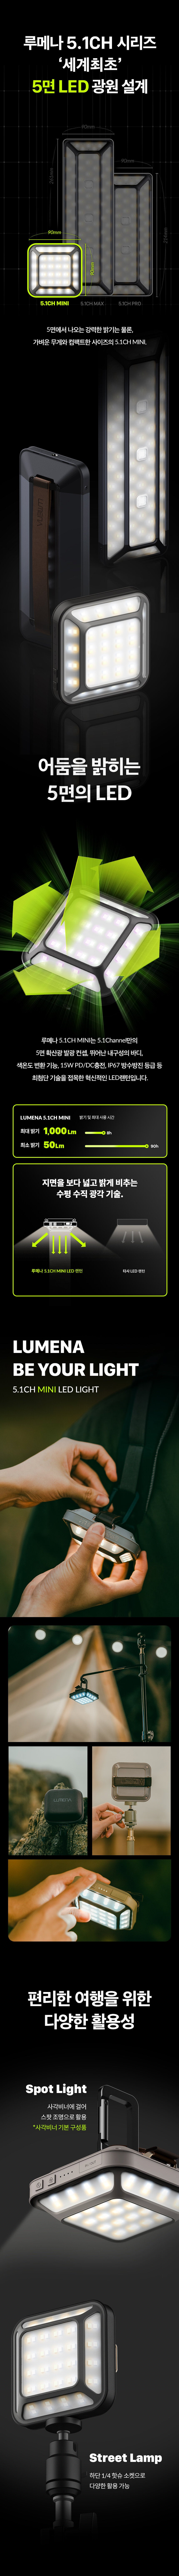 Lumena - N9 5.1CH MINI LED Light 行動電源照明LED燈｜露營燈｜聚光燈｜防水燈